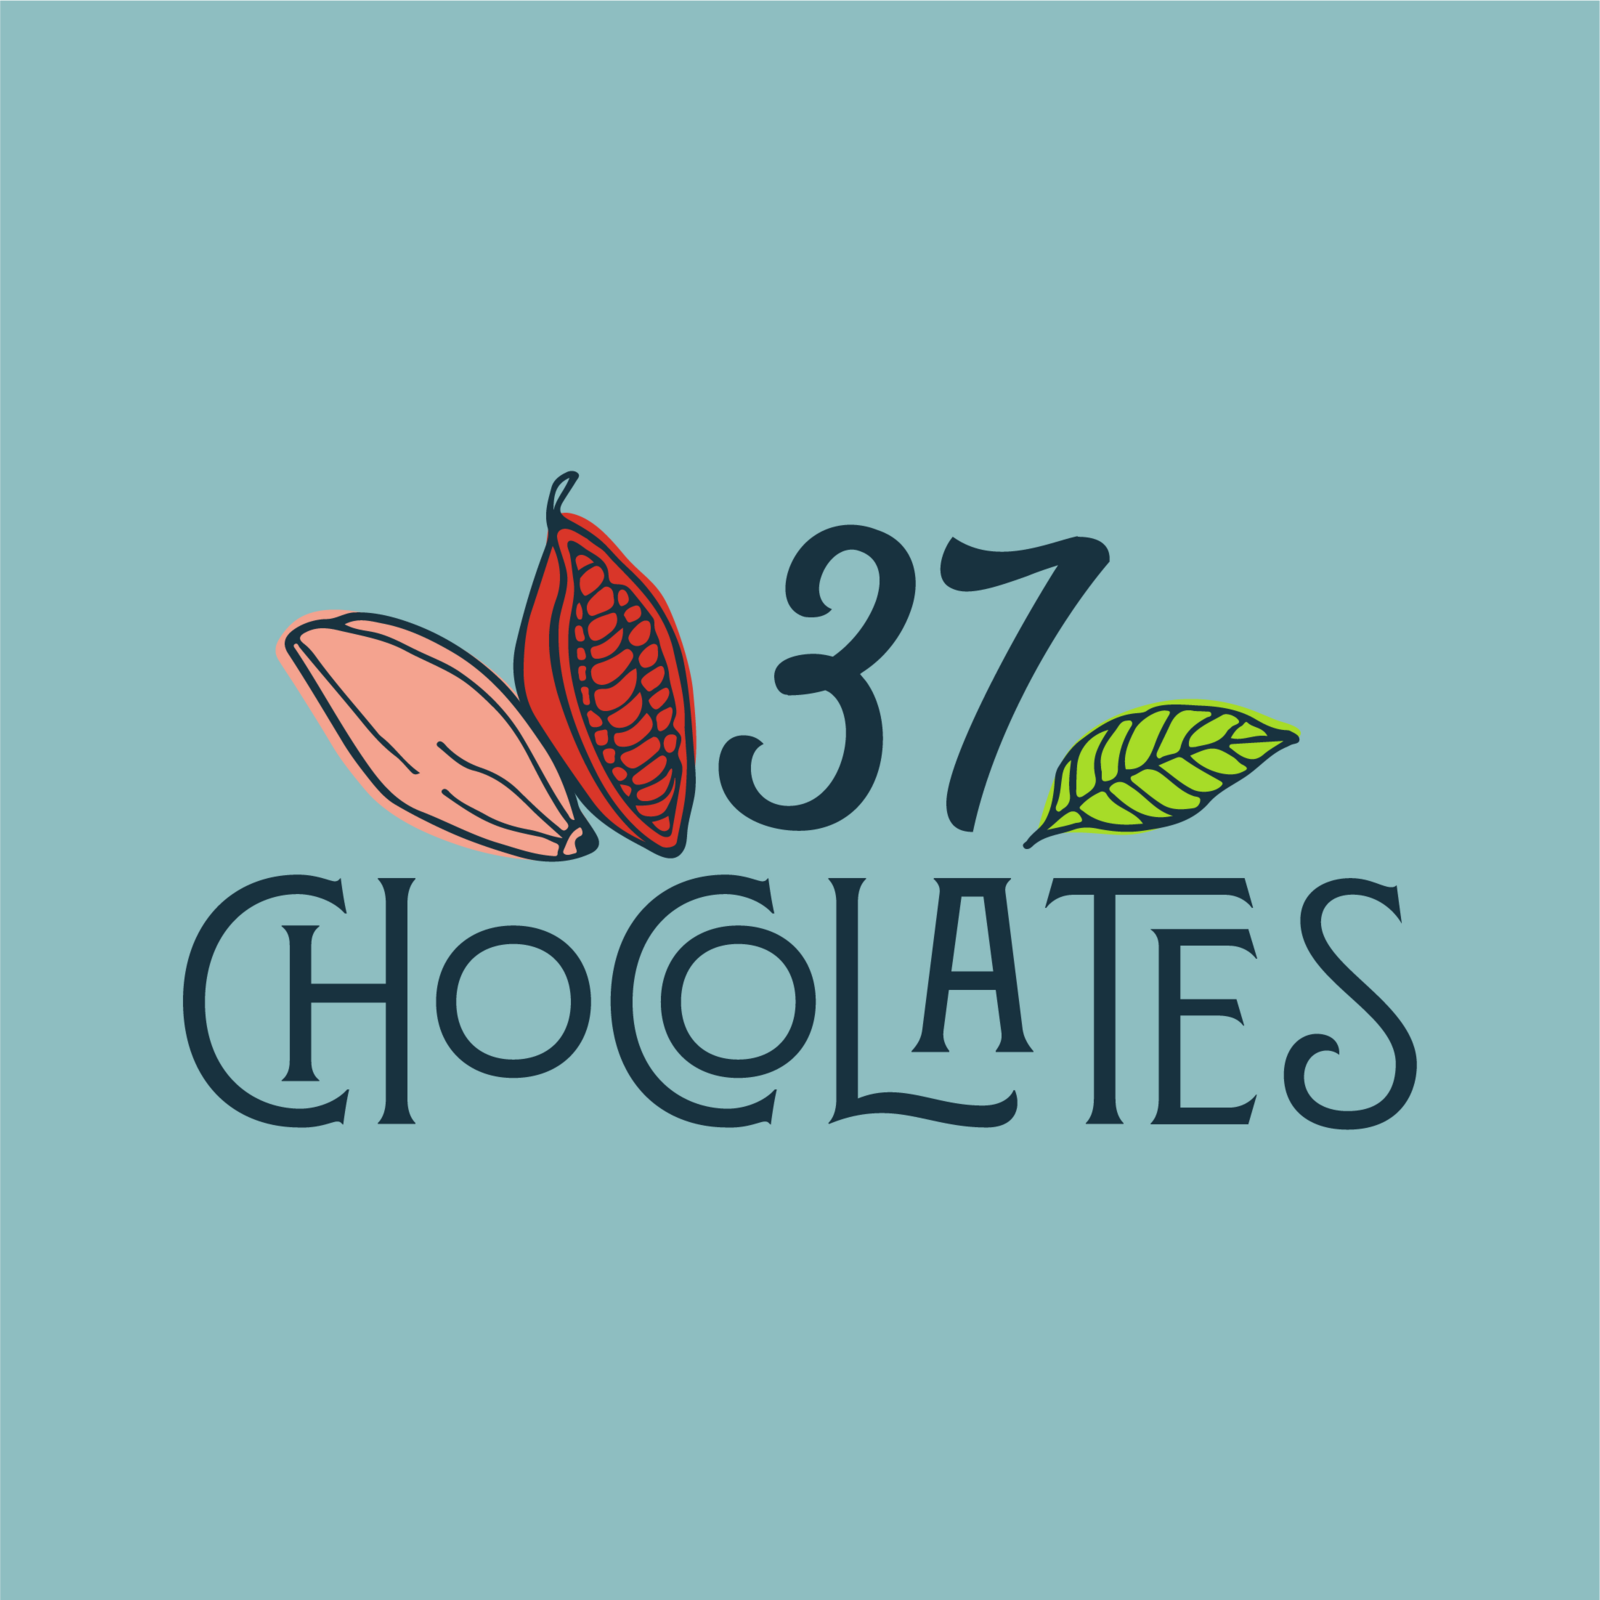 37 Chocolates Mock up_Color Brandmark